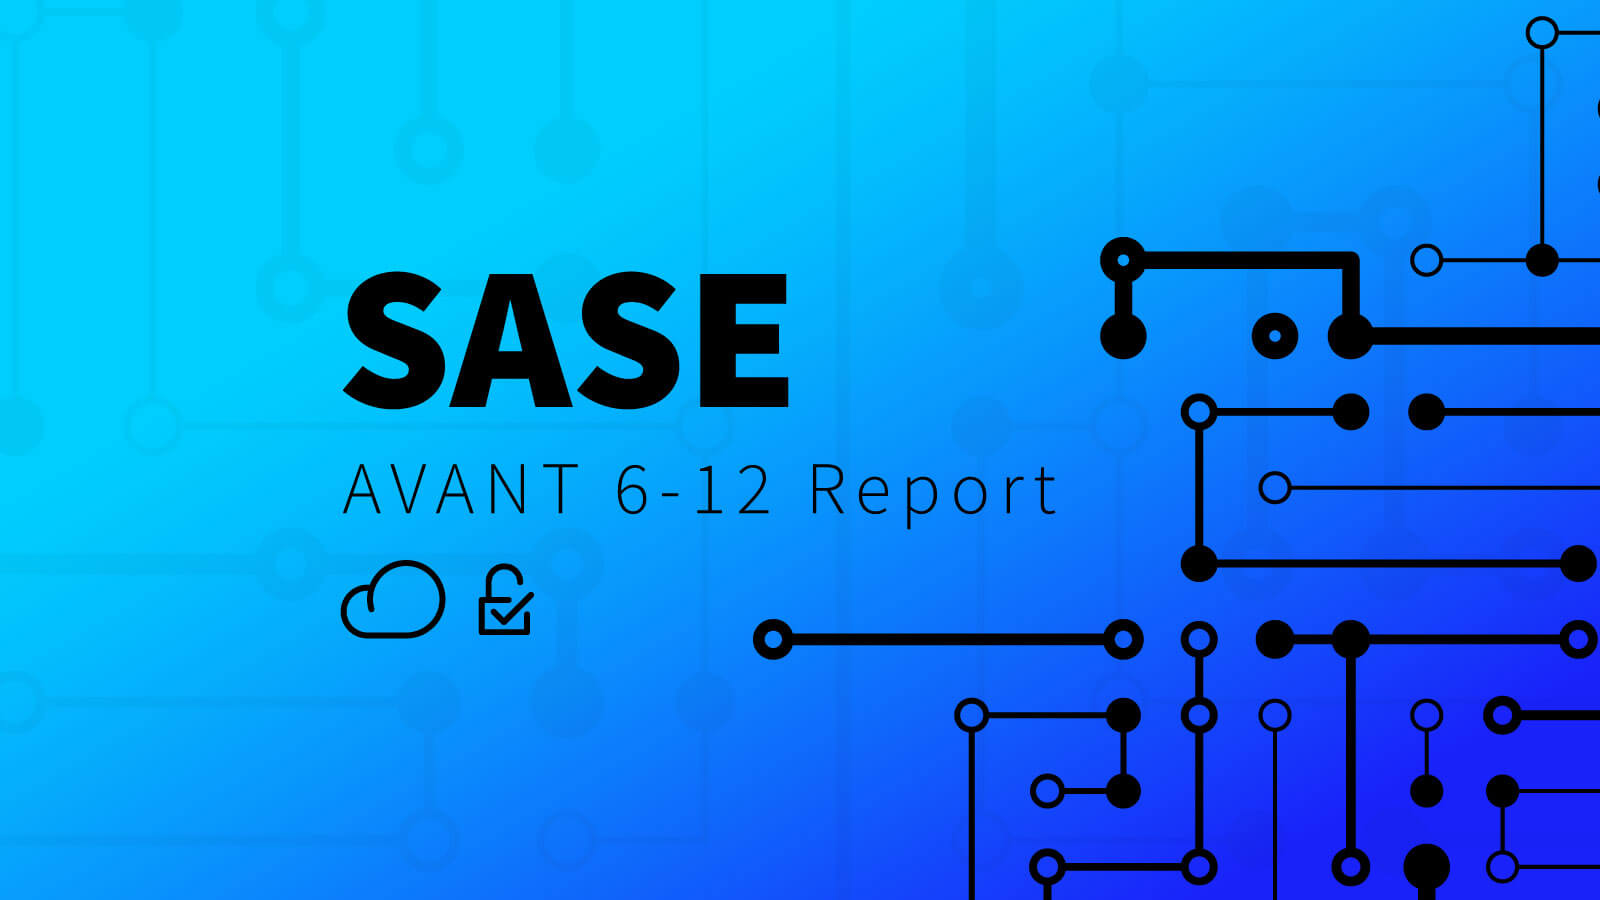 6-12 Report: SASE